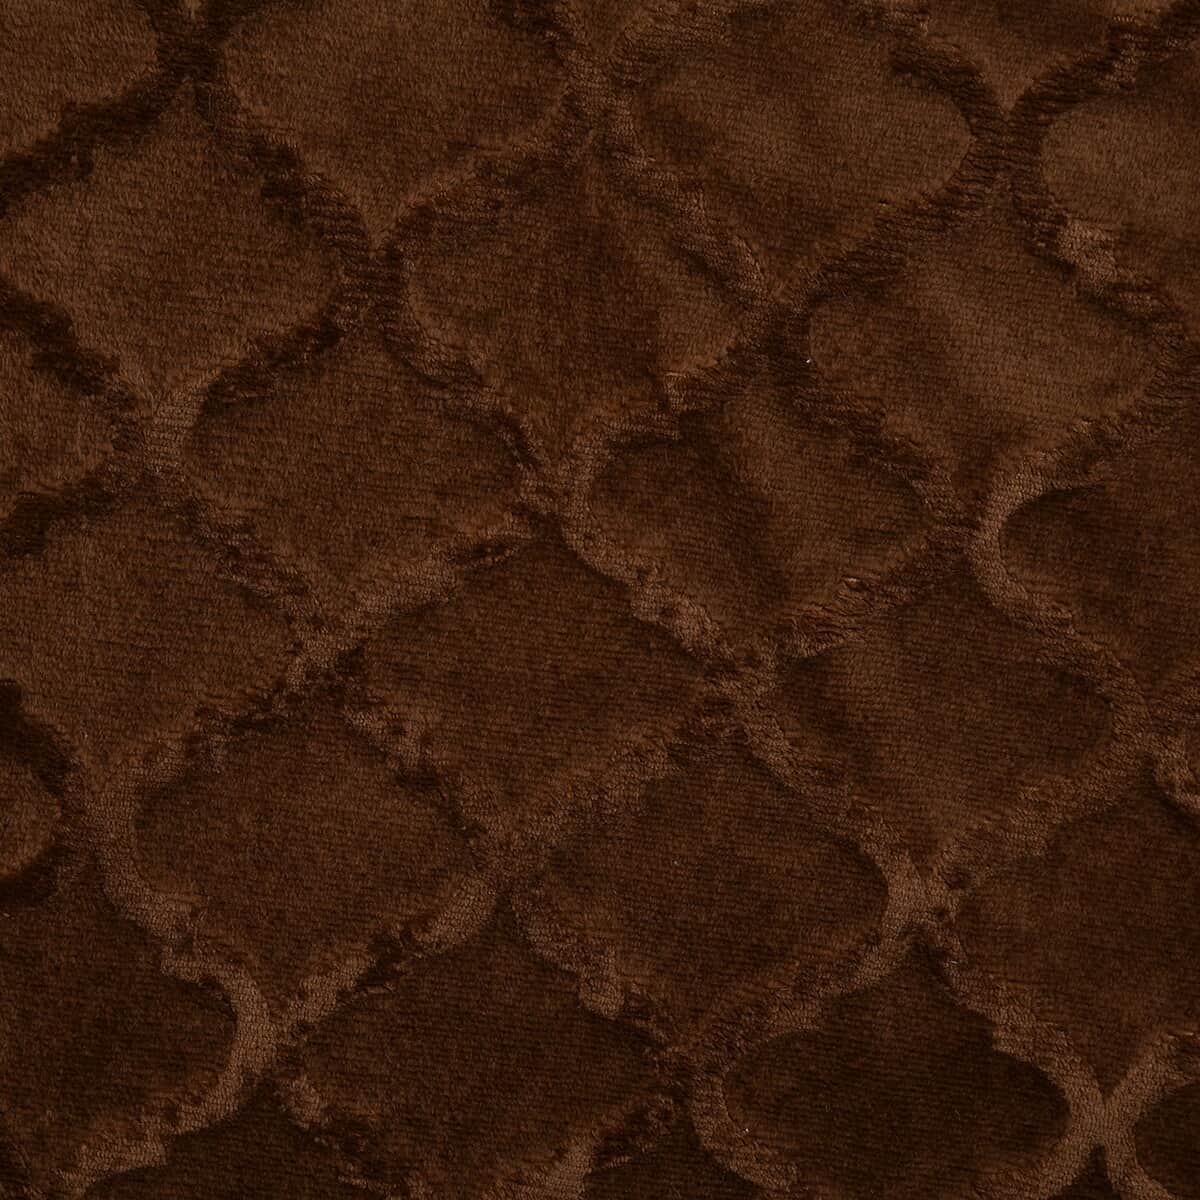 HOMESMART Dark Solid Brown Microfiber Brushed Flannel Sherpa Blanket image number 4